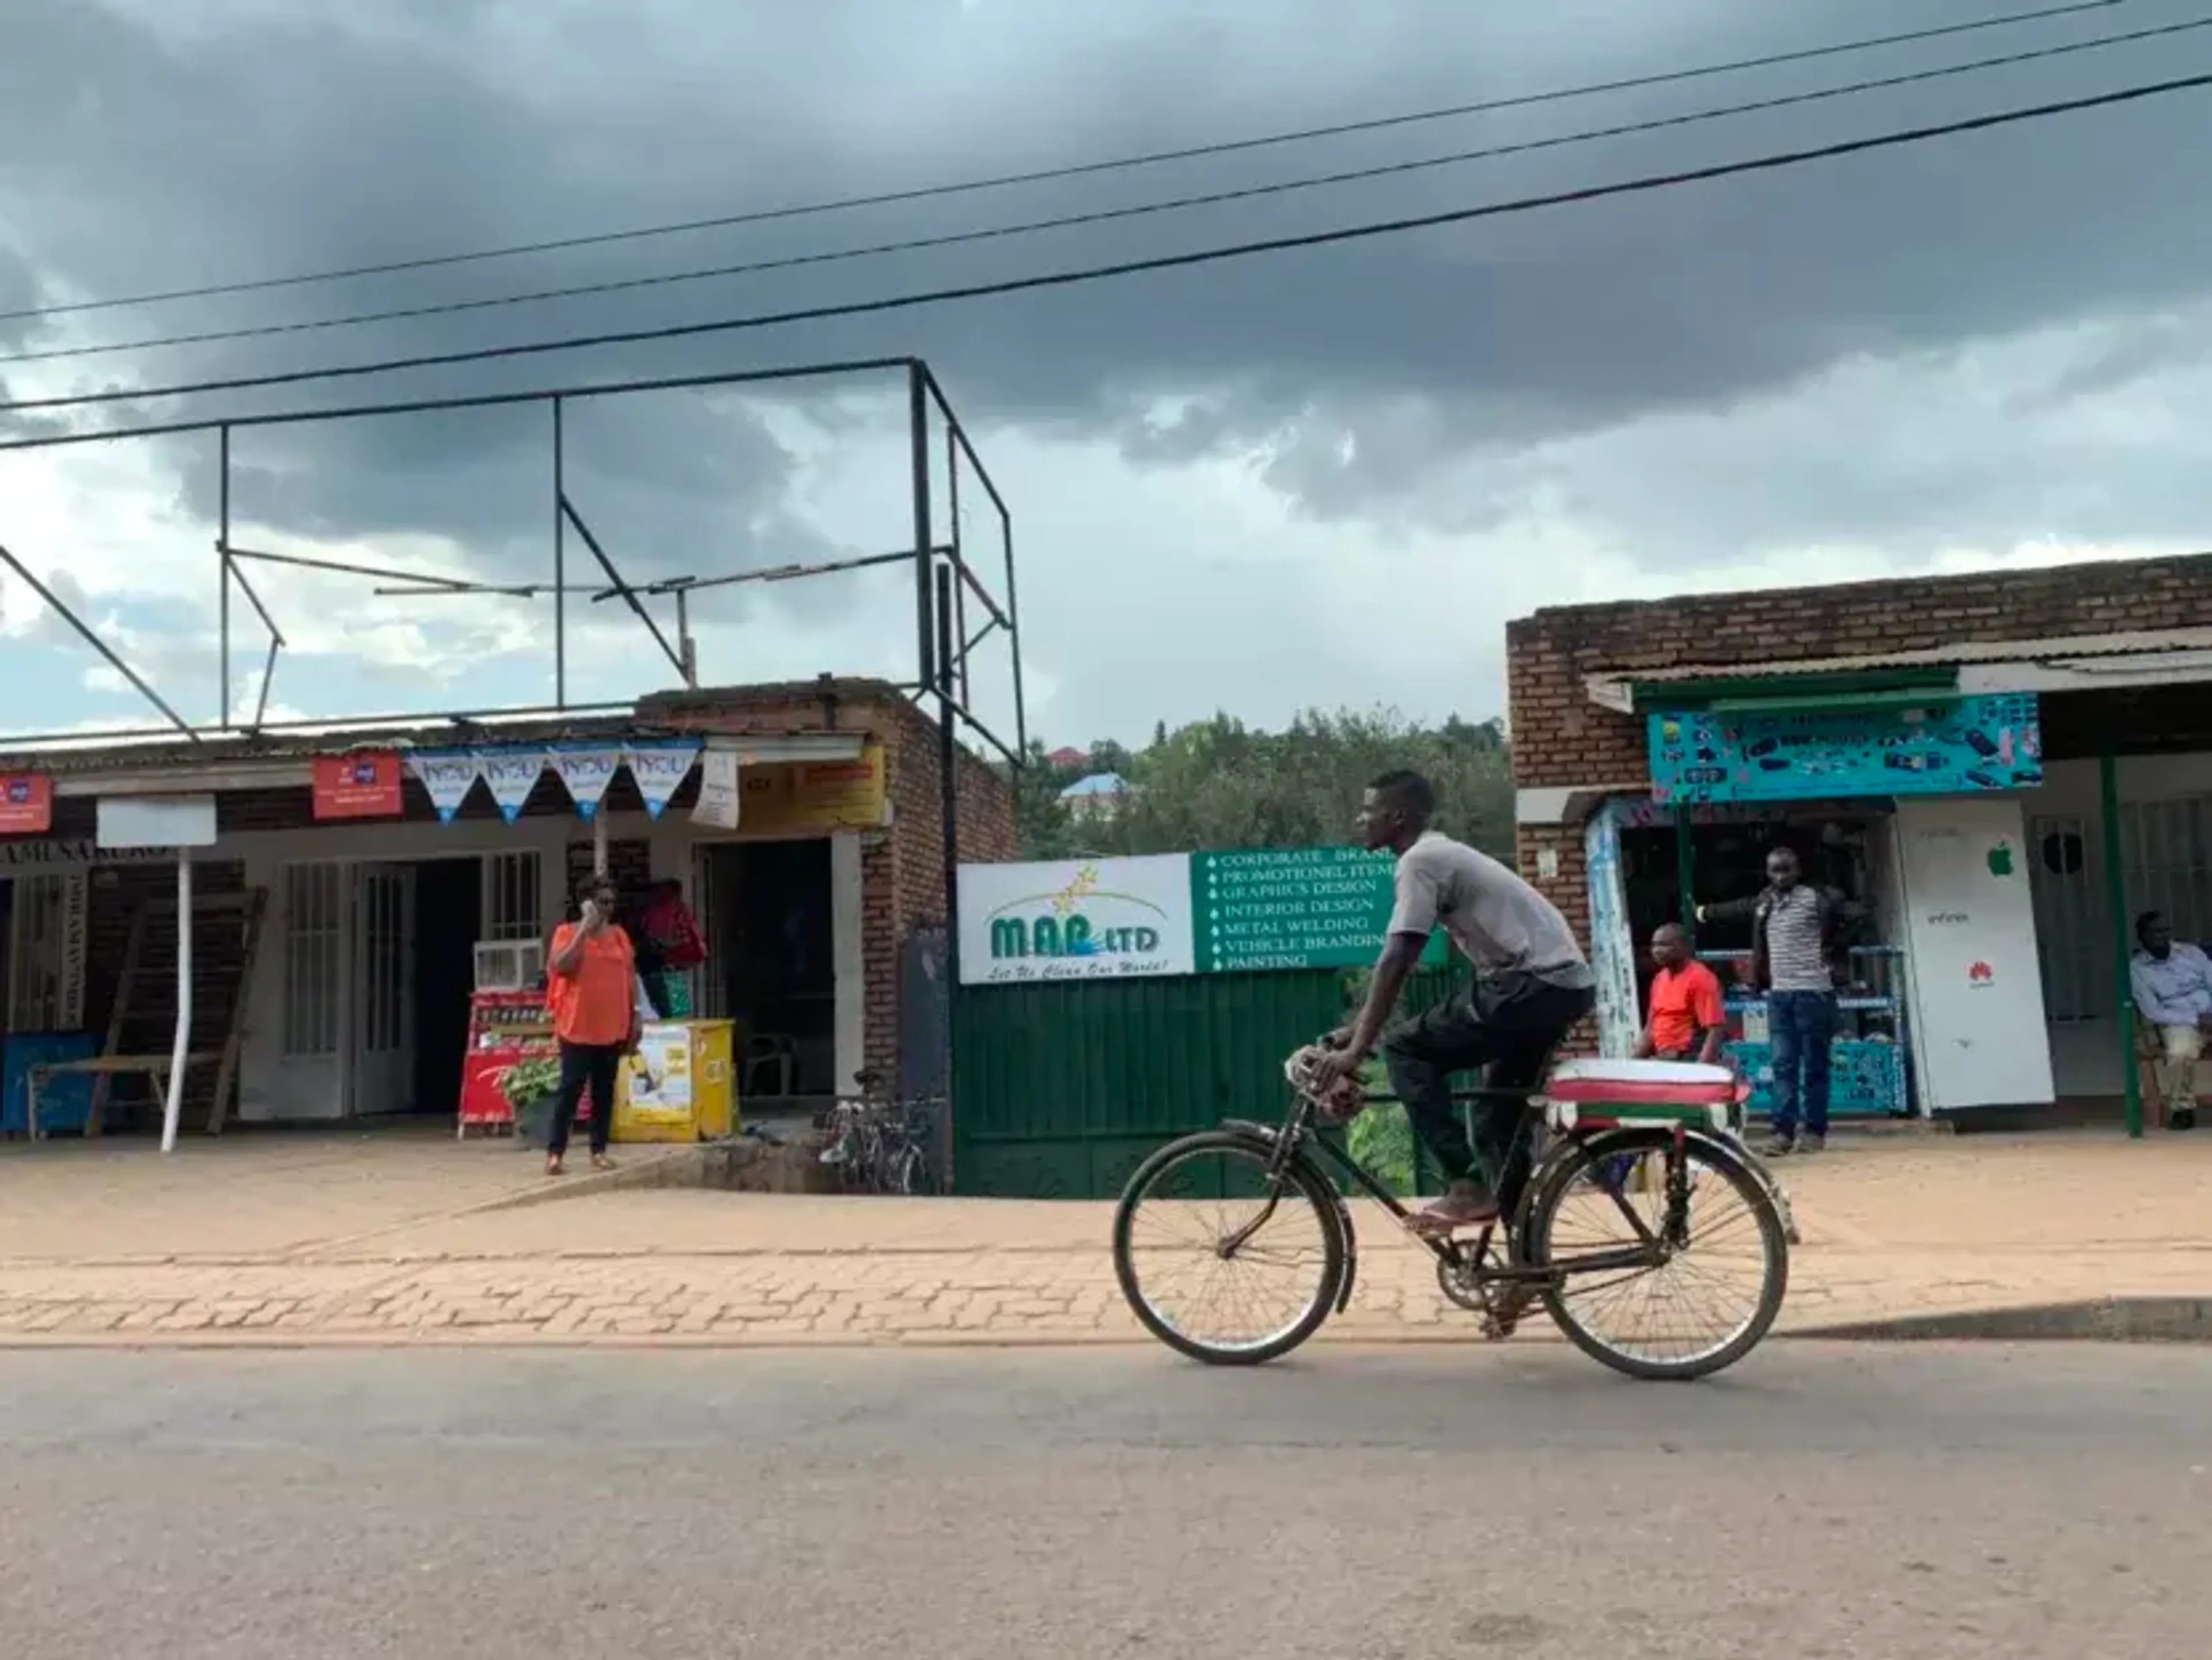 Street scene in Rwanda